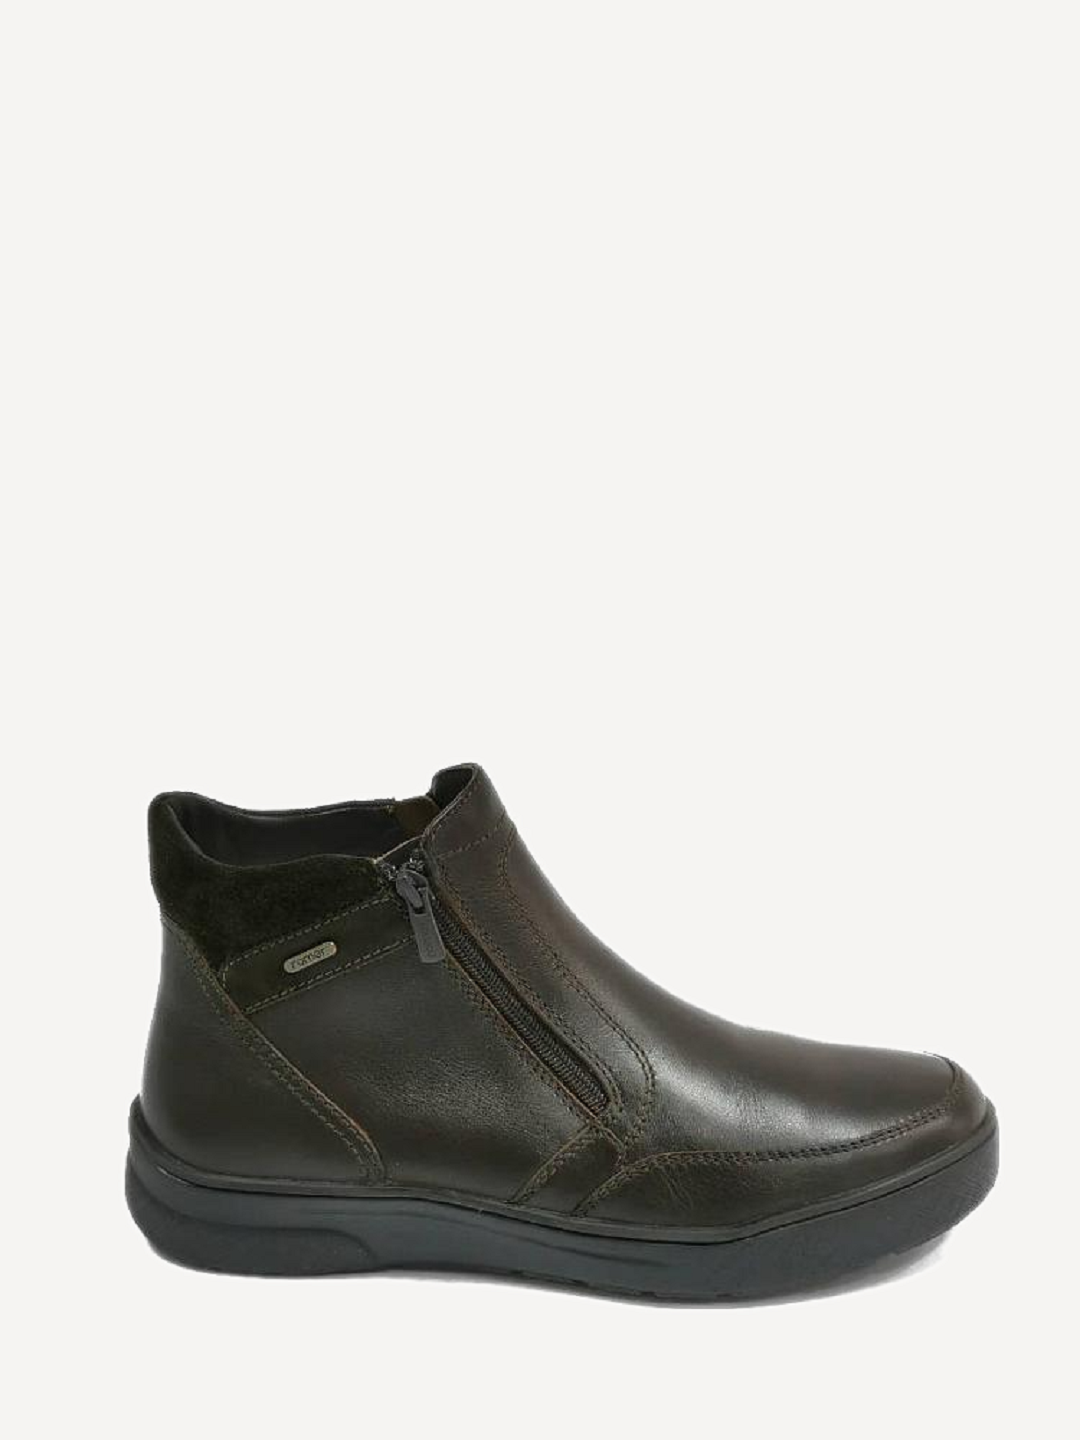 Romer мужские ботинки зимние 993569